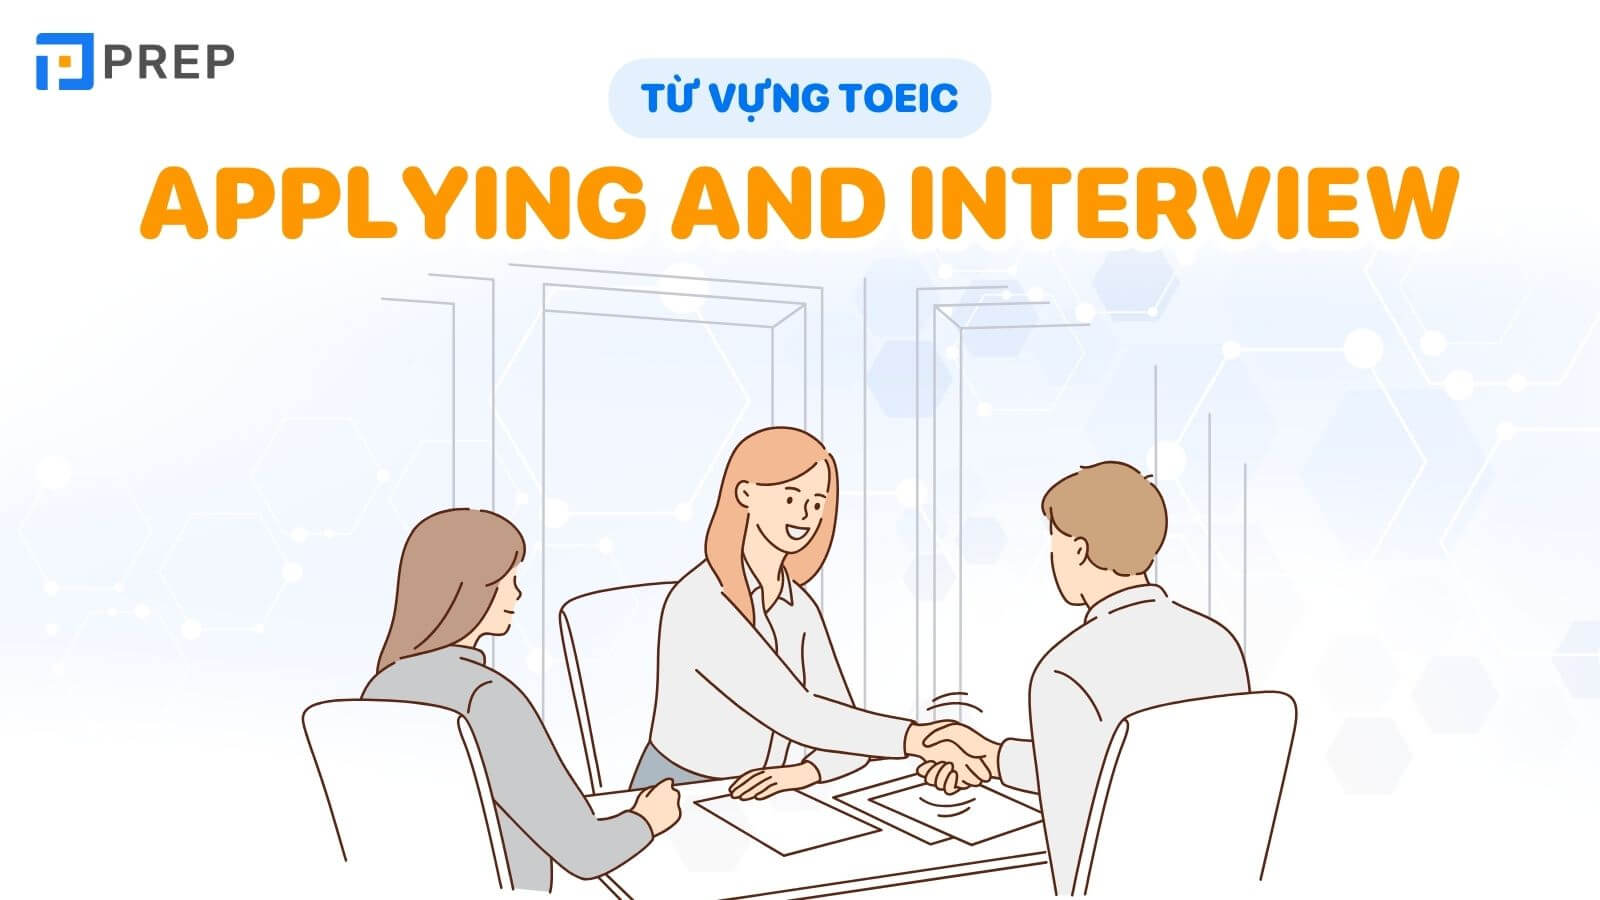 tu-vung-toeic-chu-de-applying-and-interviewing.jpg